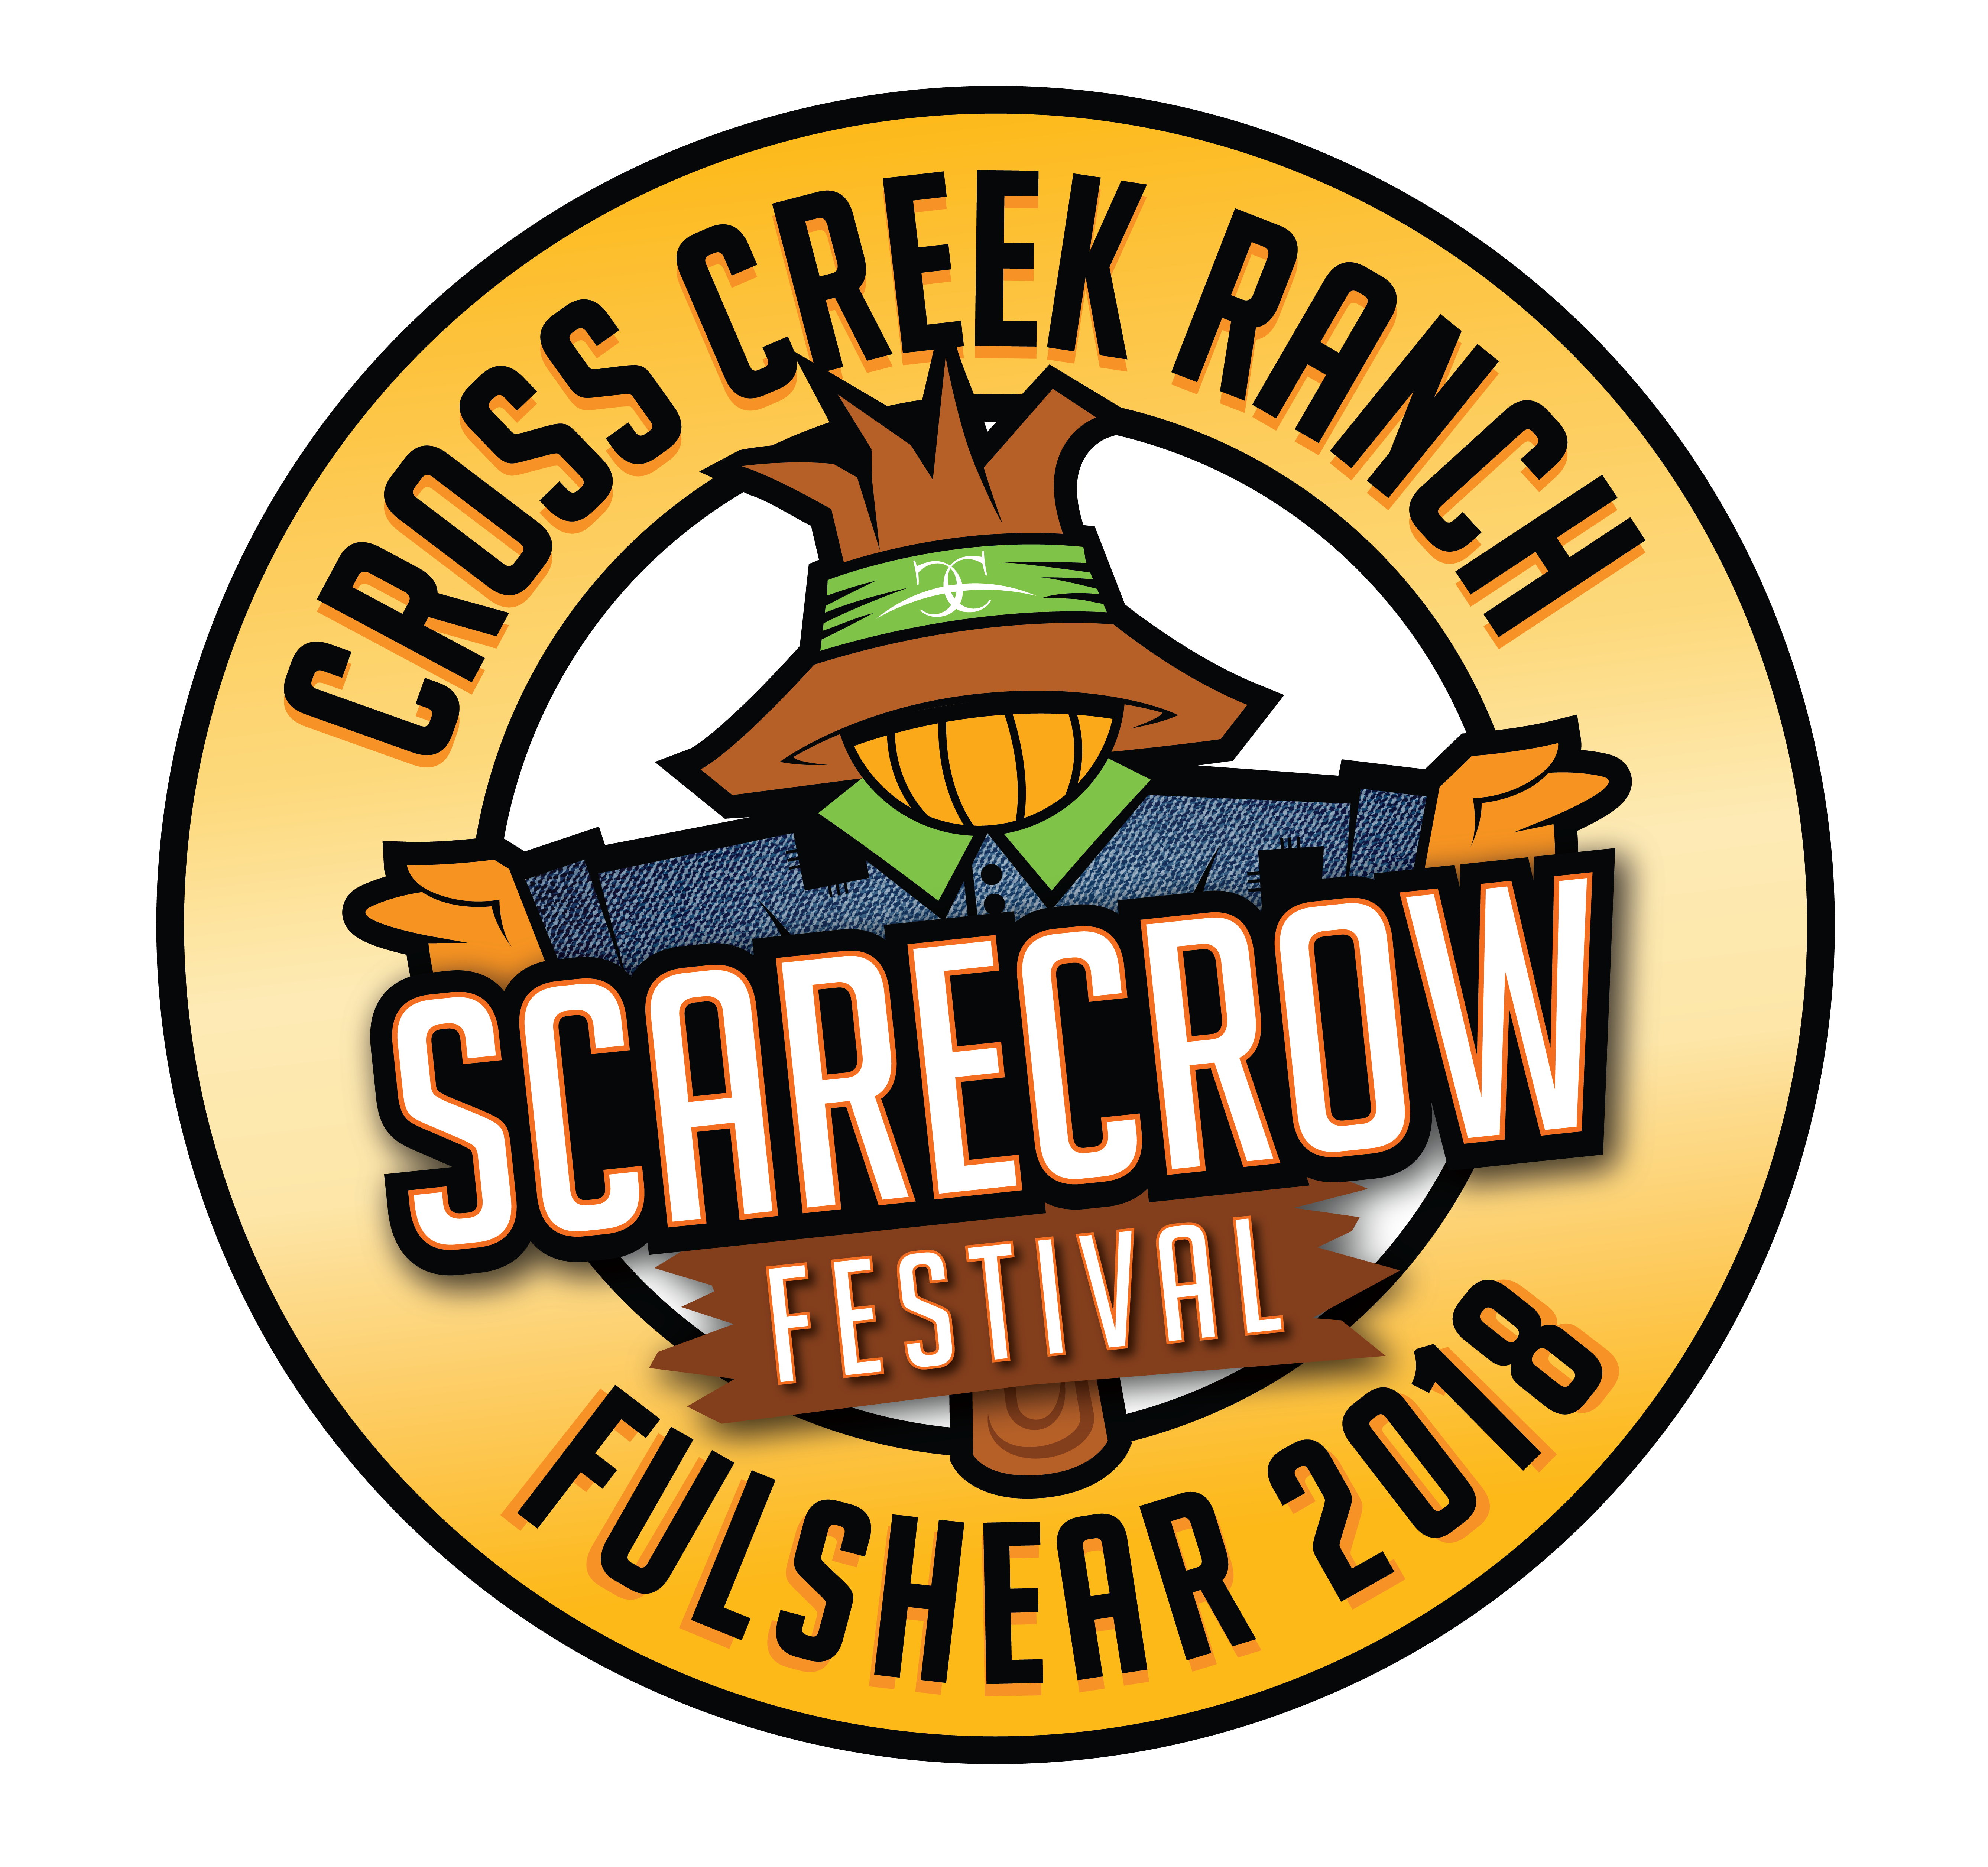 Cross Creek Ranch Scarecrow Fest Oct. 21